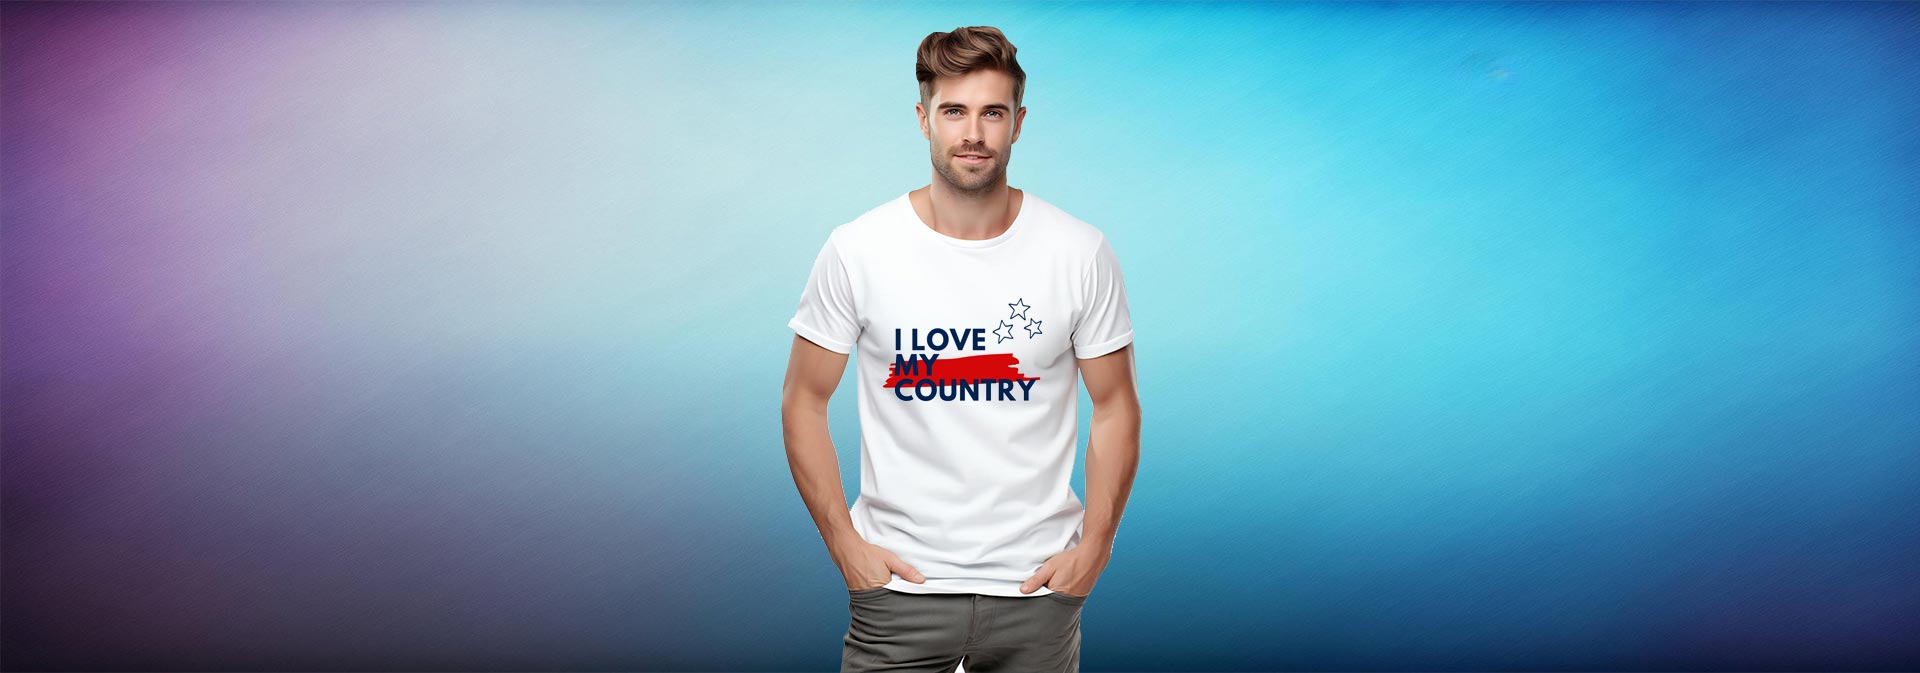 Men Country Lover